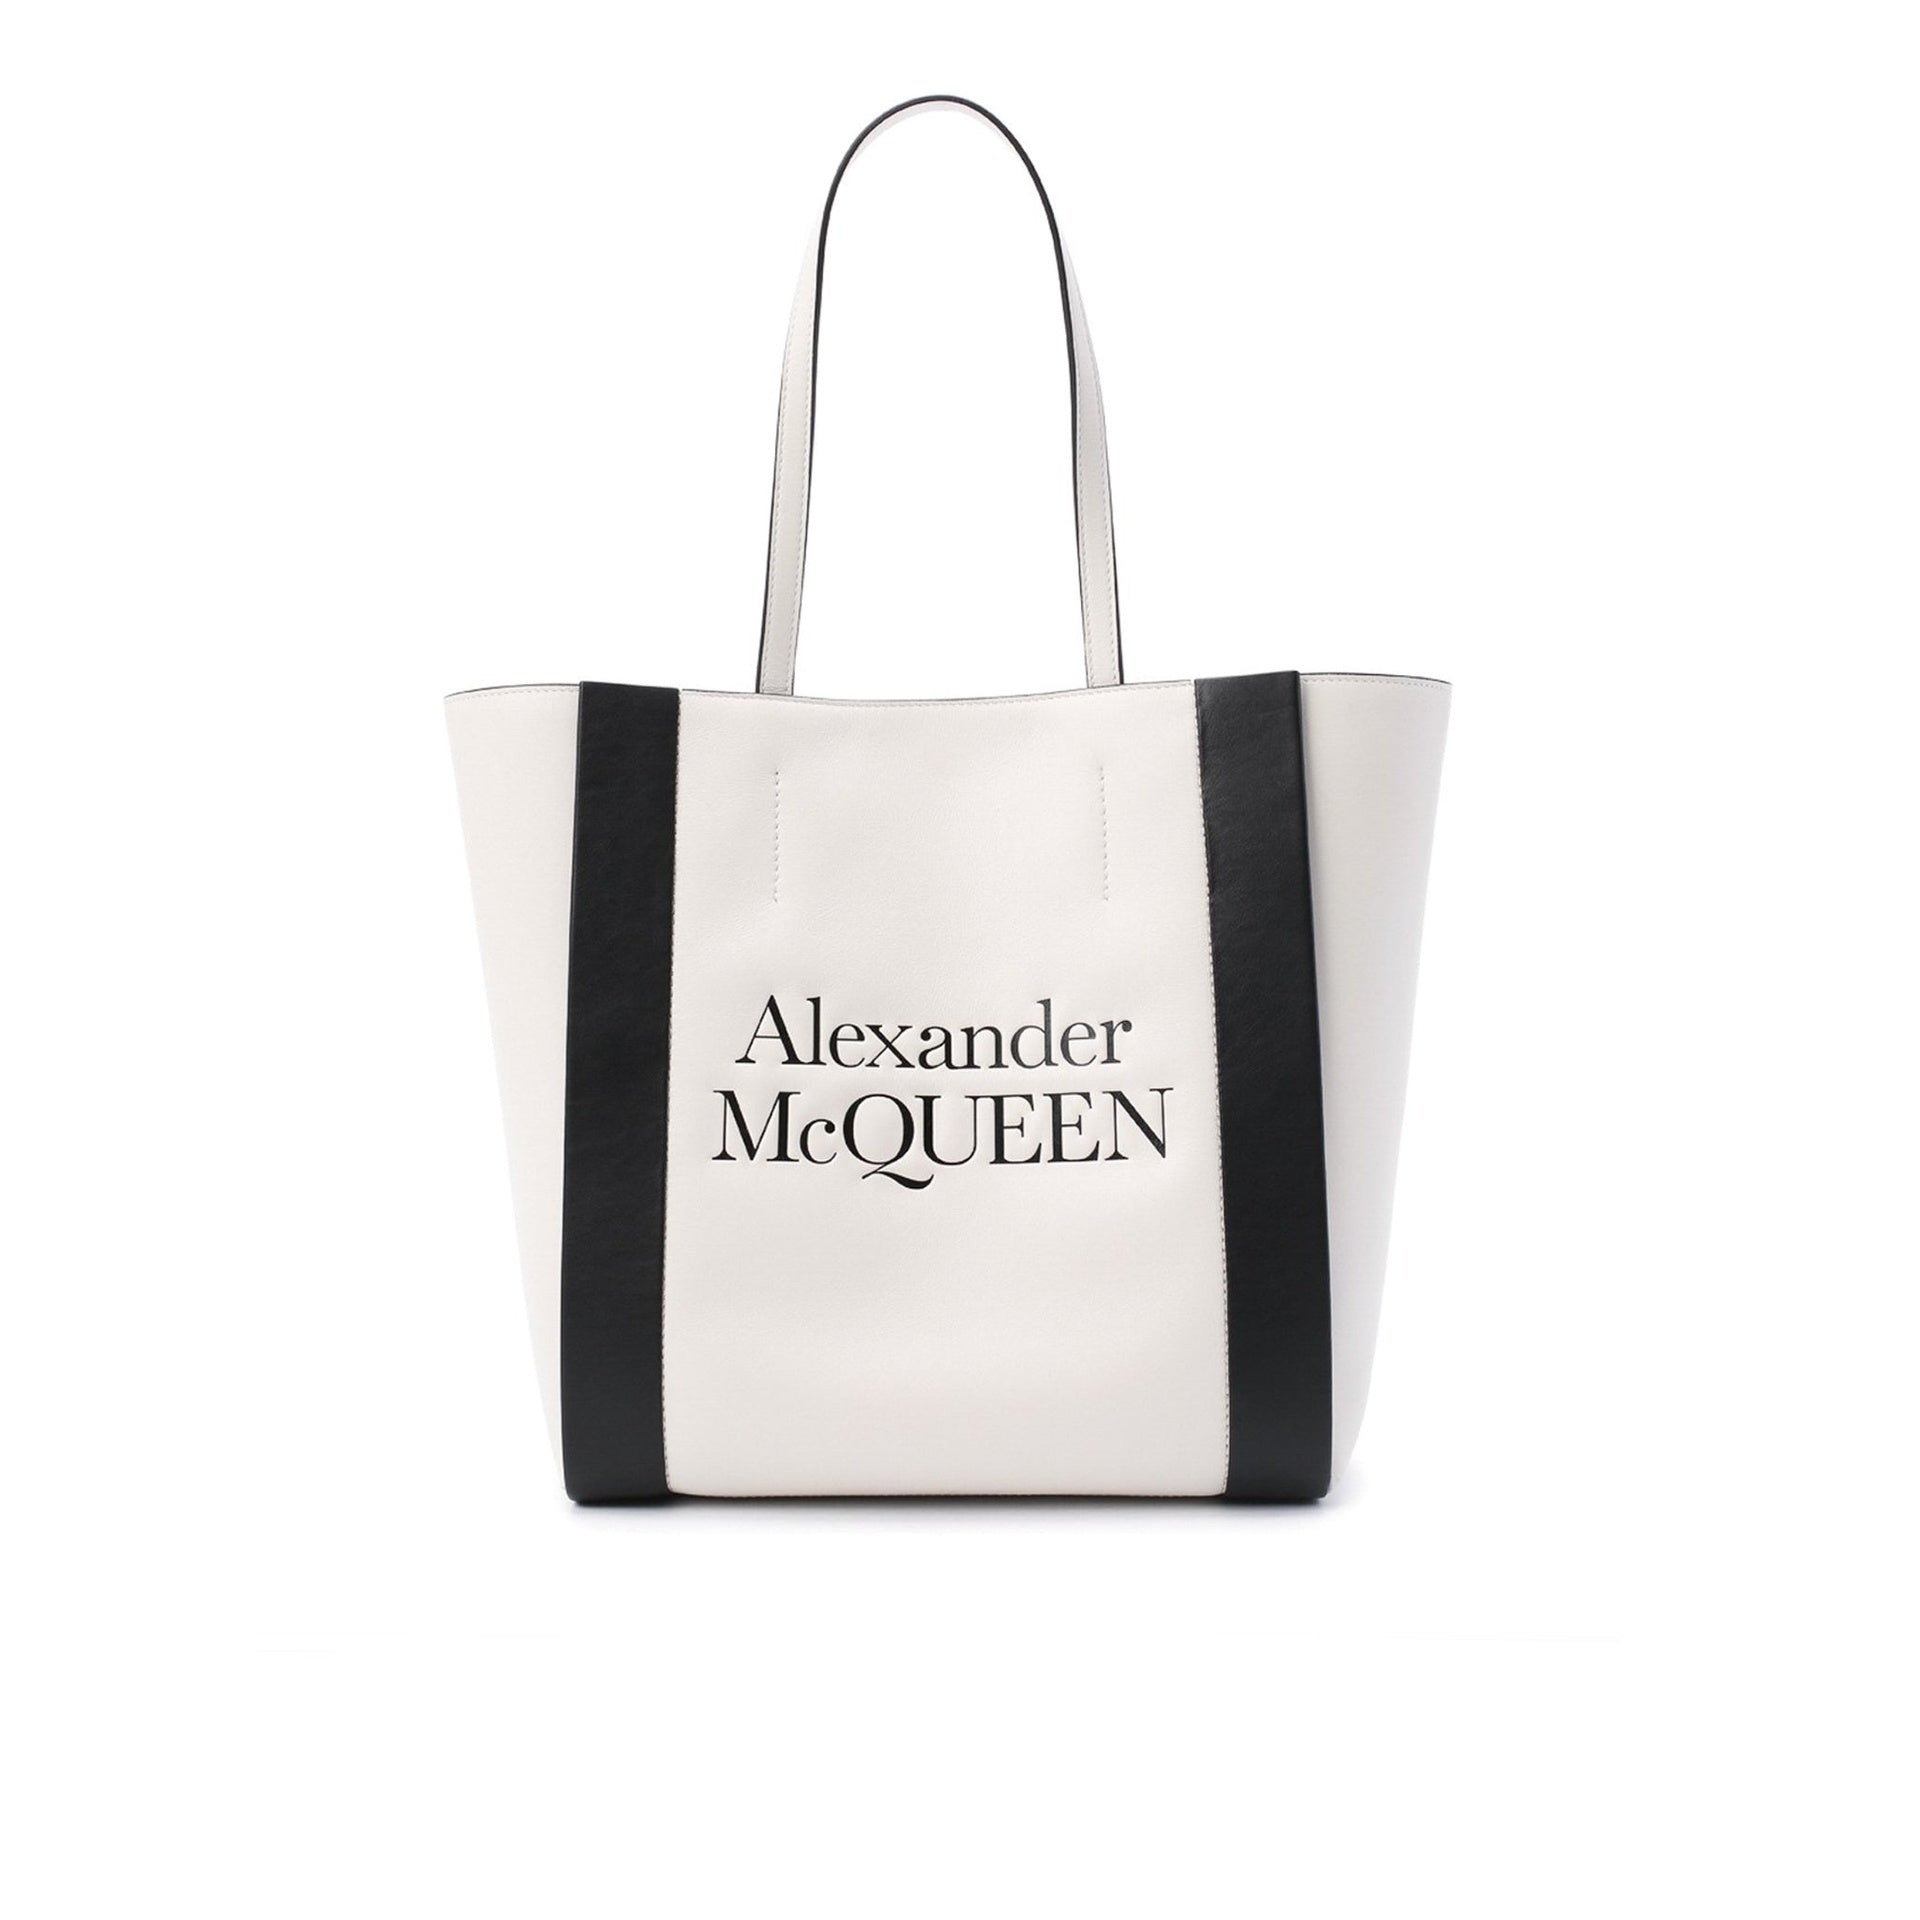 ALEXANDER-MCQUEEN-OUTLET-SALE-Alexander-Mcqueen-Logo-Tote-Taschen-CREAM-UNI-ARCHIVE-COLLECTION.jpg